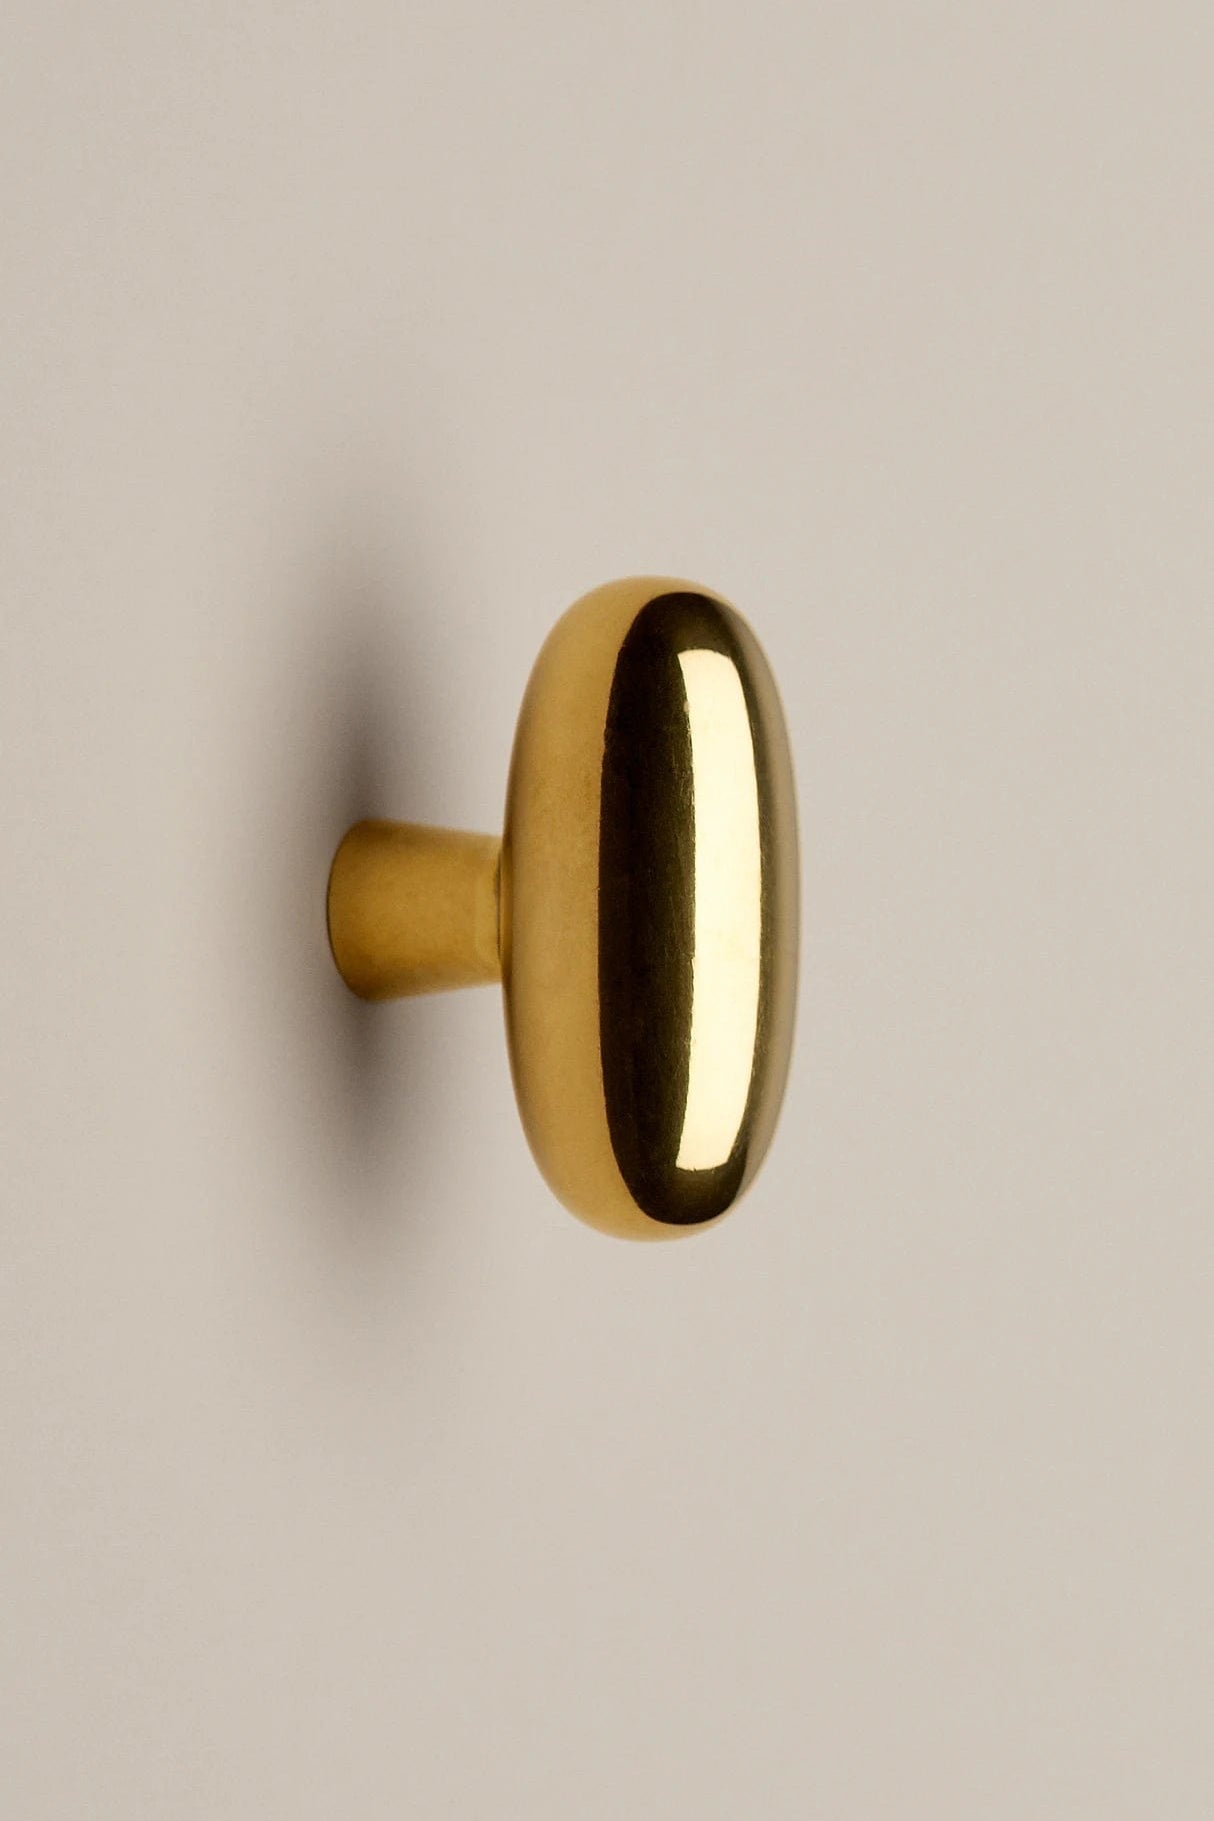 Blunt Polished Brass - Knob Decorative Objects